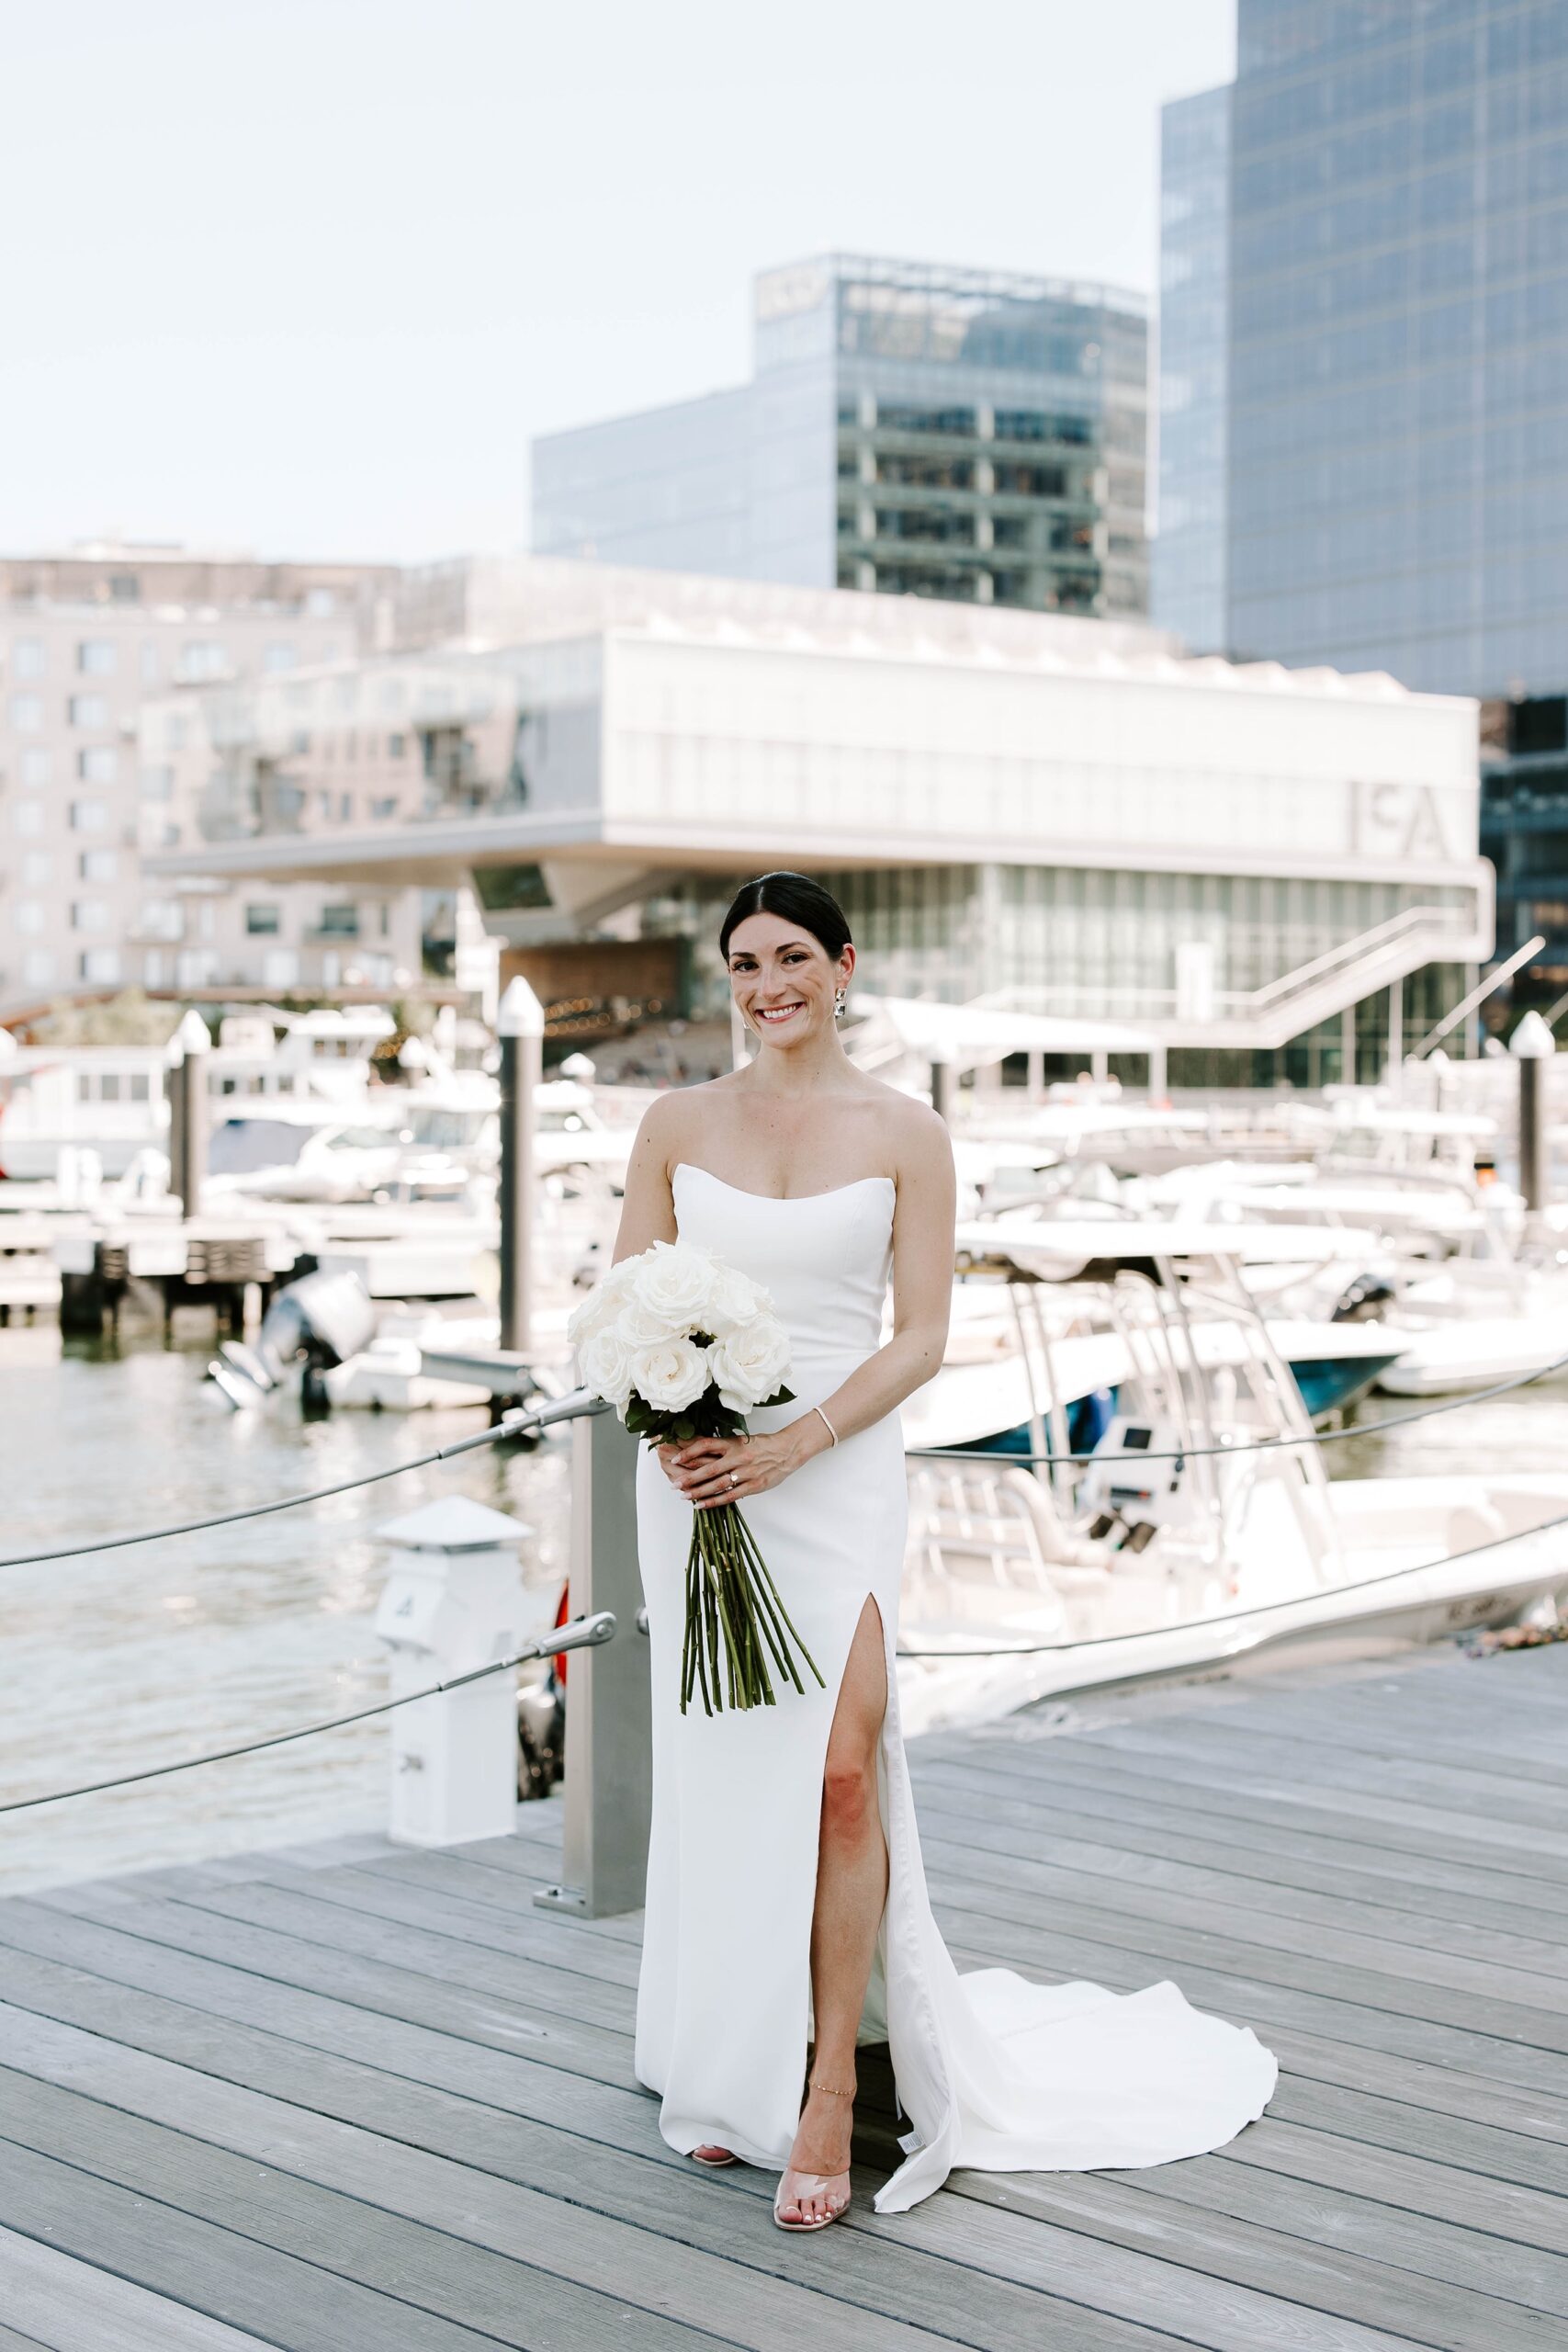 Bridal portraits at the Boston Seaport